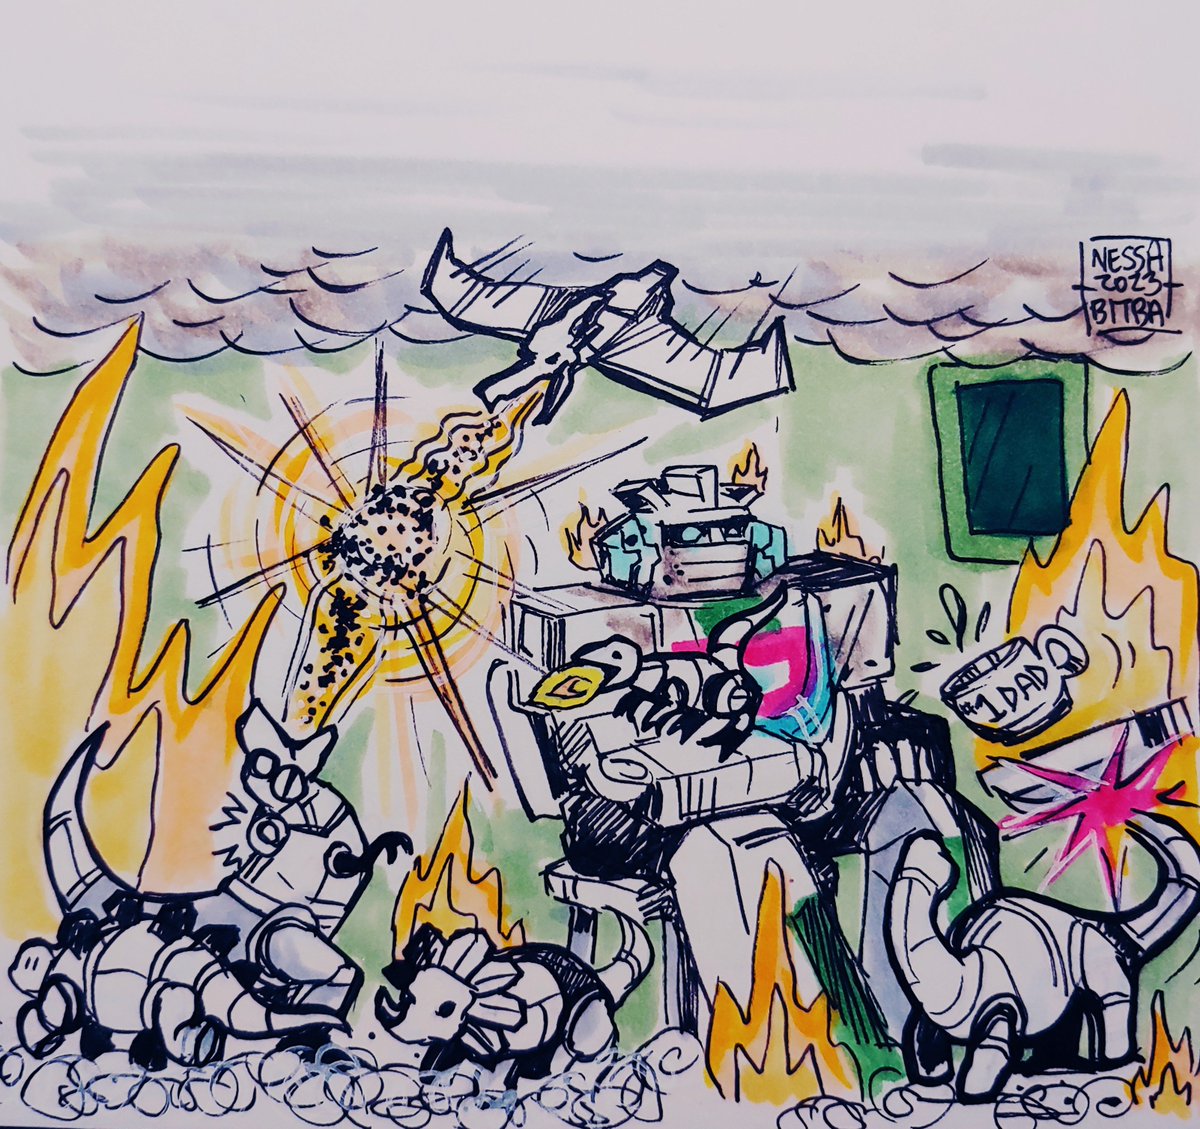 Wheeljack & the dinobabies
Expectations vs reality
#Maccadam #Transformers